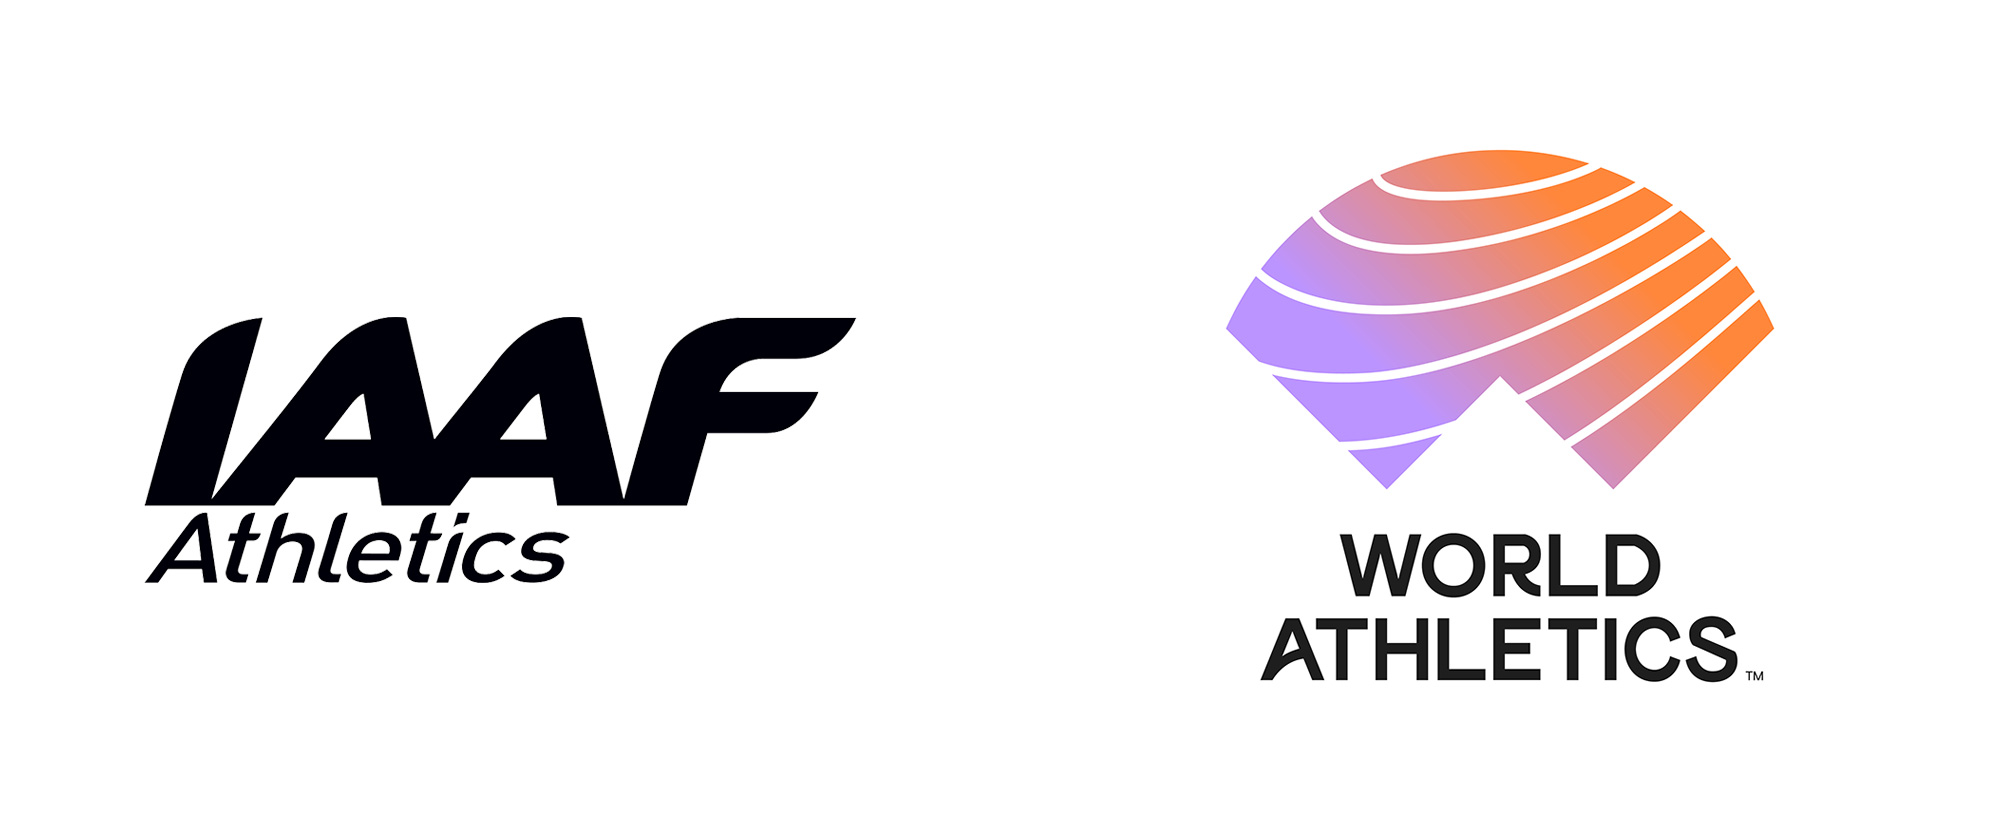 New Name, Logo, and Identity for World Athletics